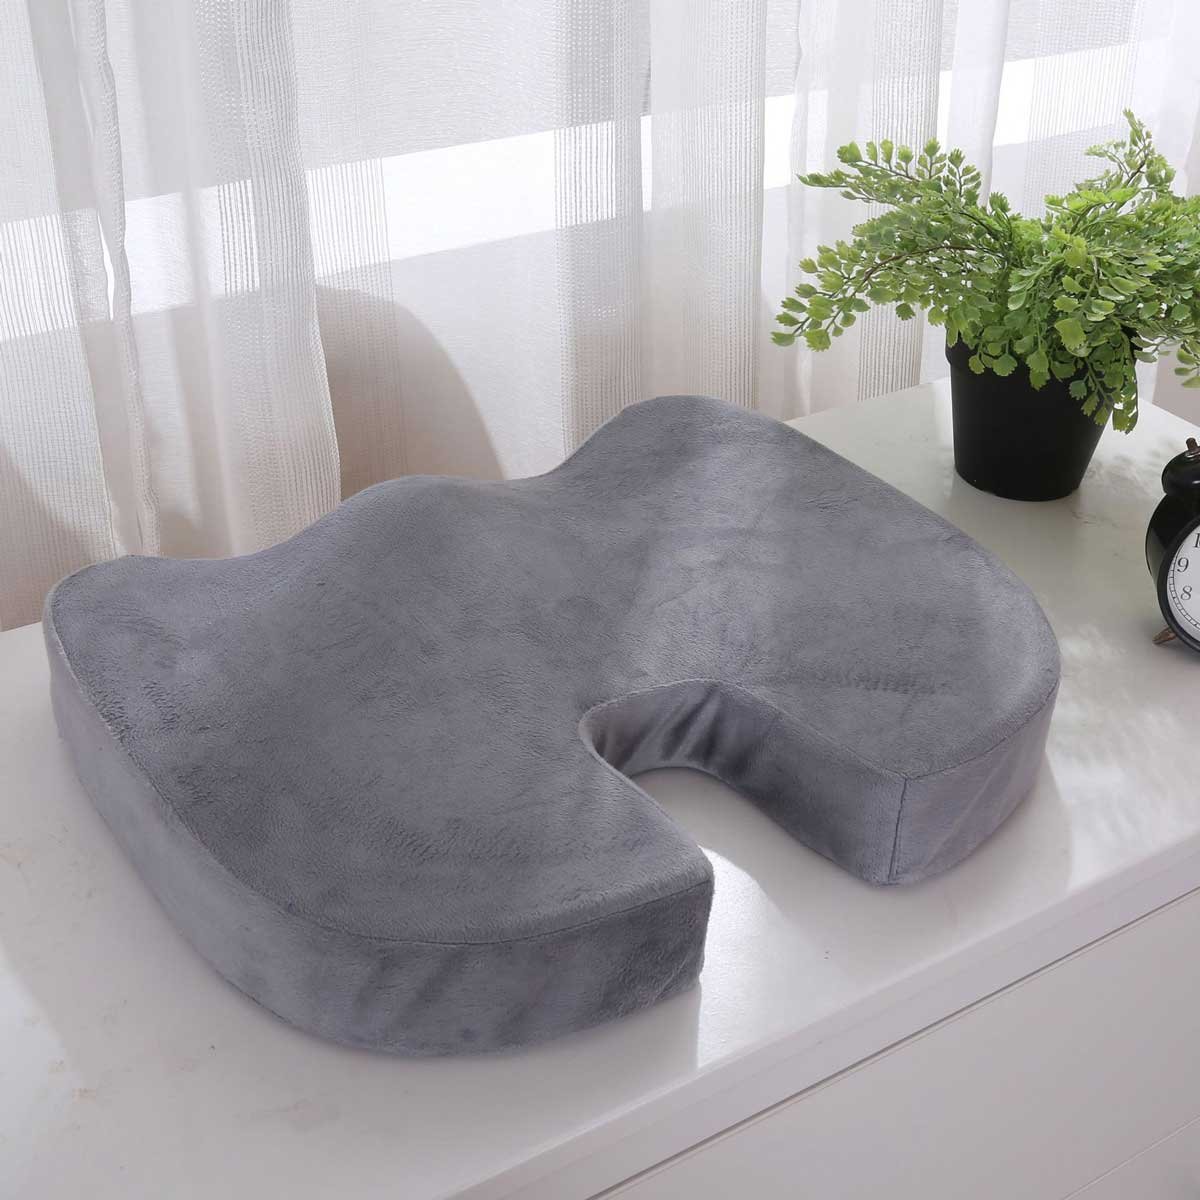 high-quality memory foam cushion